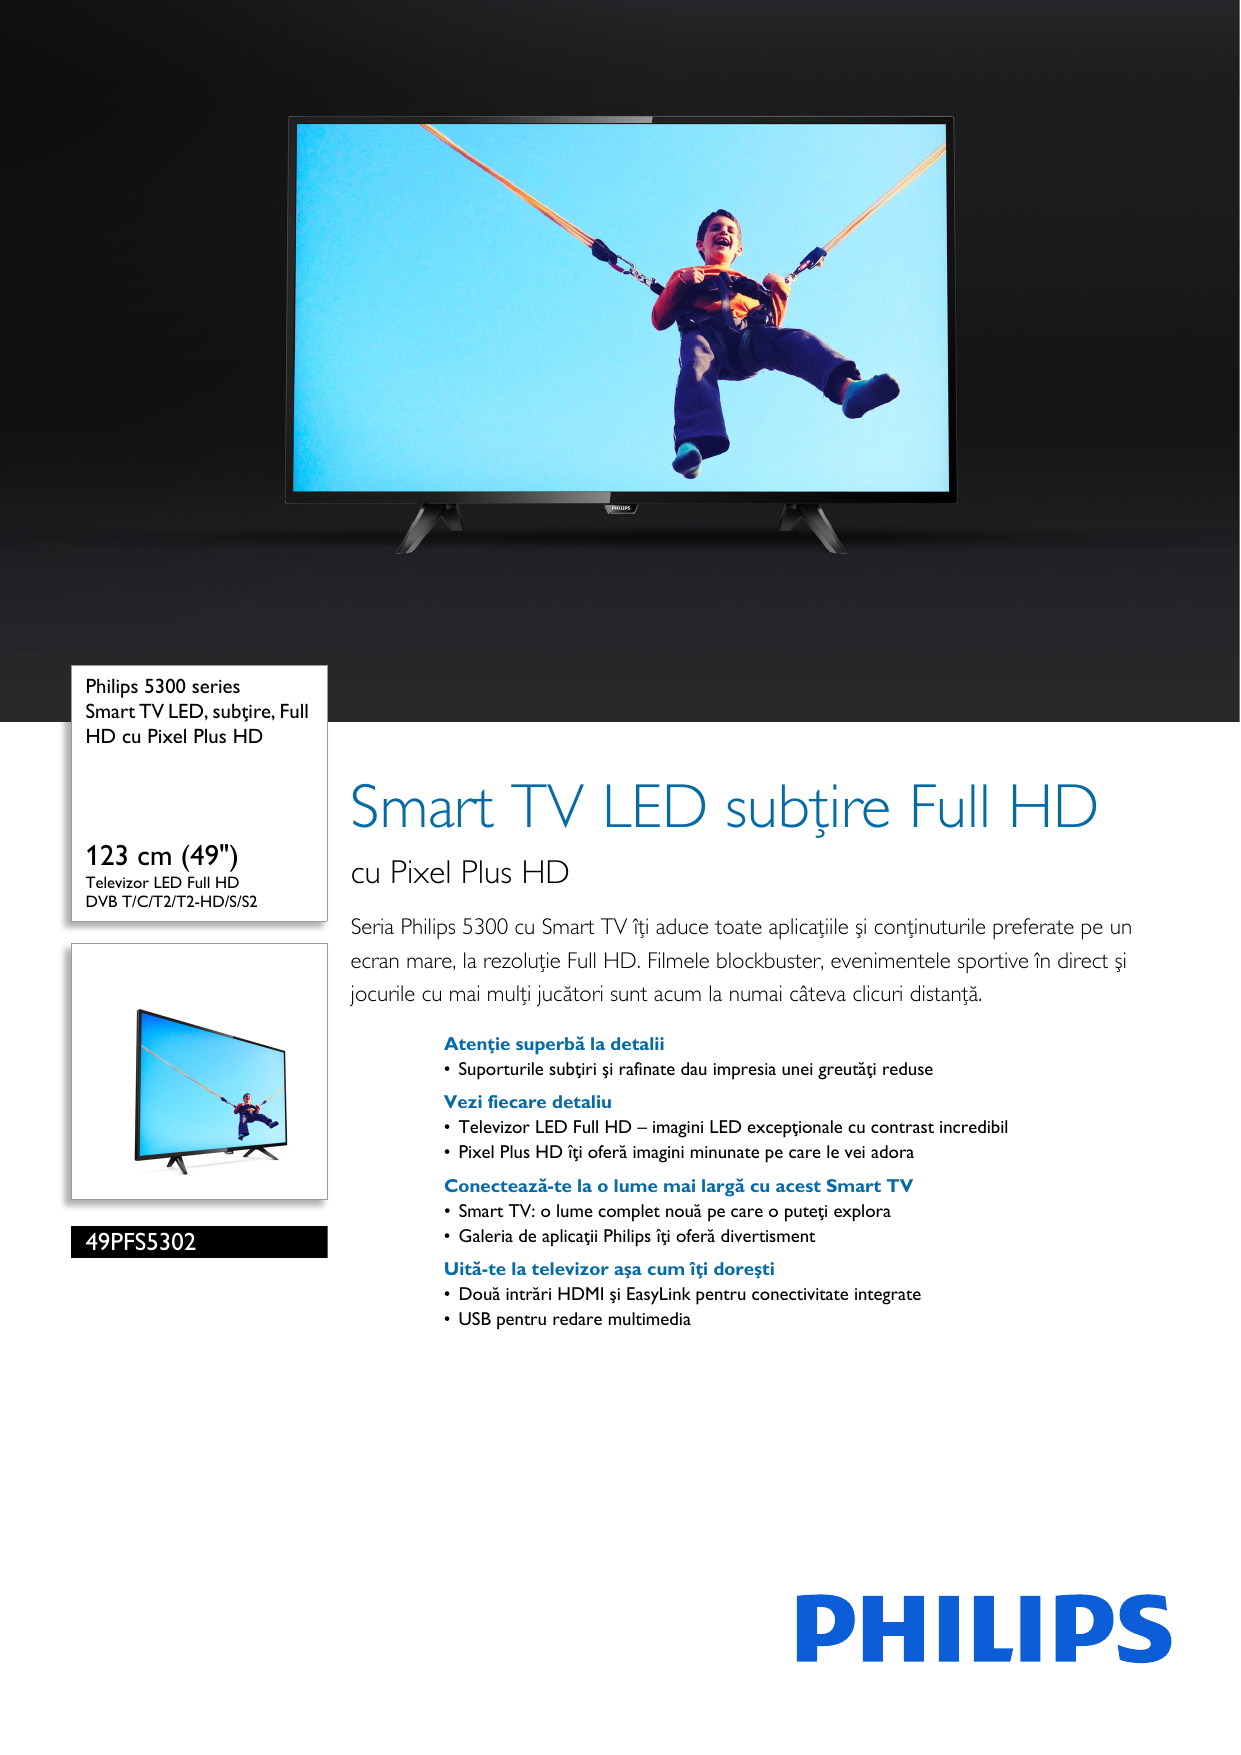 Page 1 of 3 - Philips 49PFS5302/12 Smart TV LED, Subţire, Full HD Cu Pixel Plus User Manual Pliant 49pfs5302 12 Pss Ronro